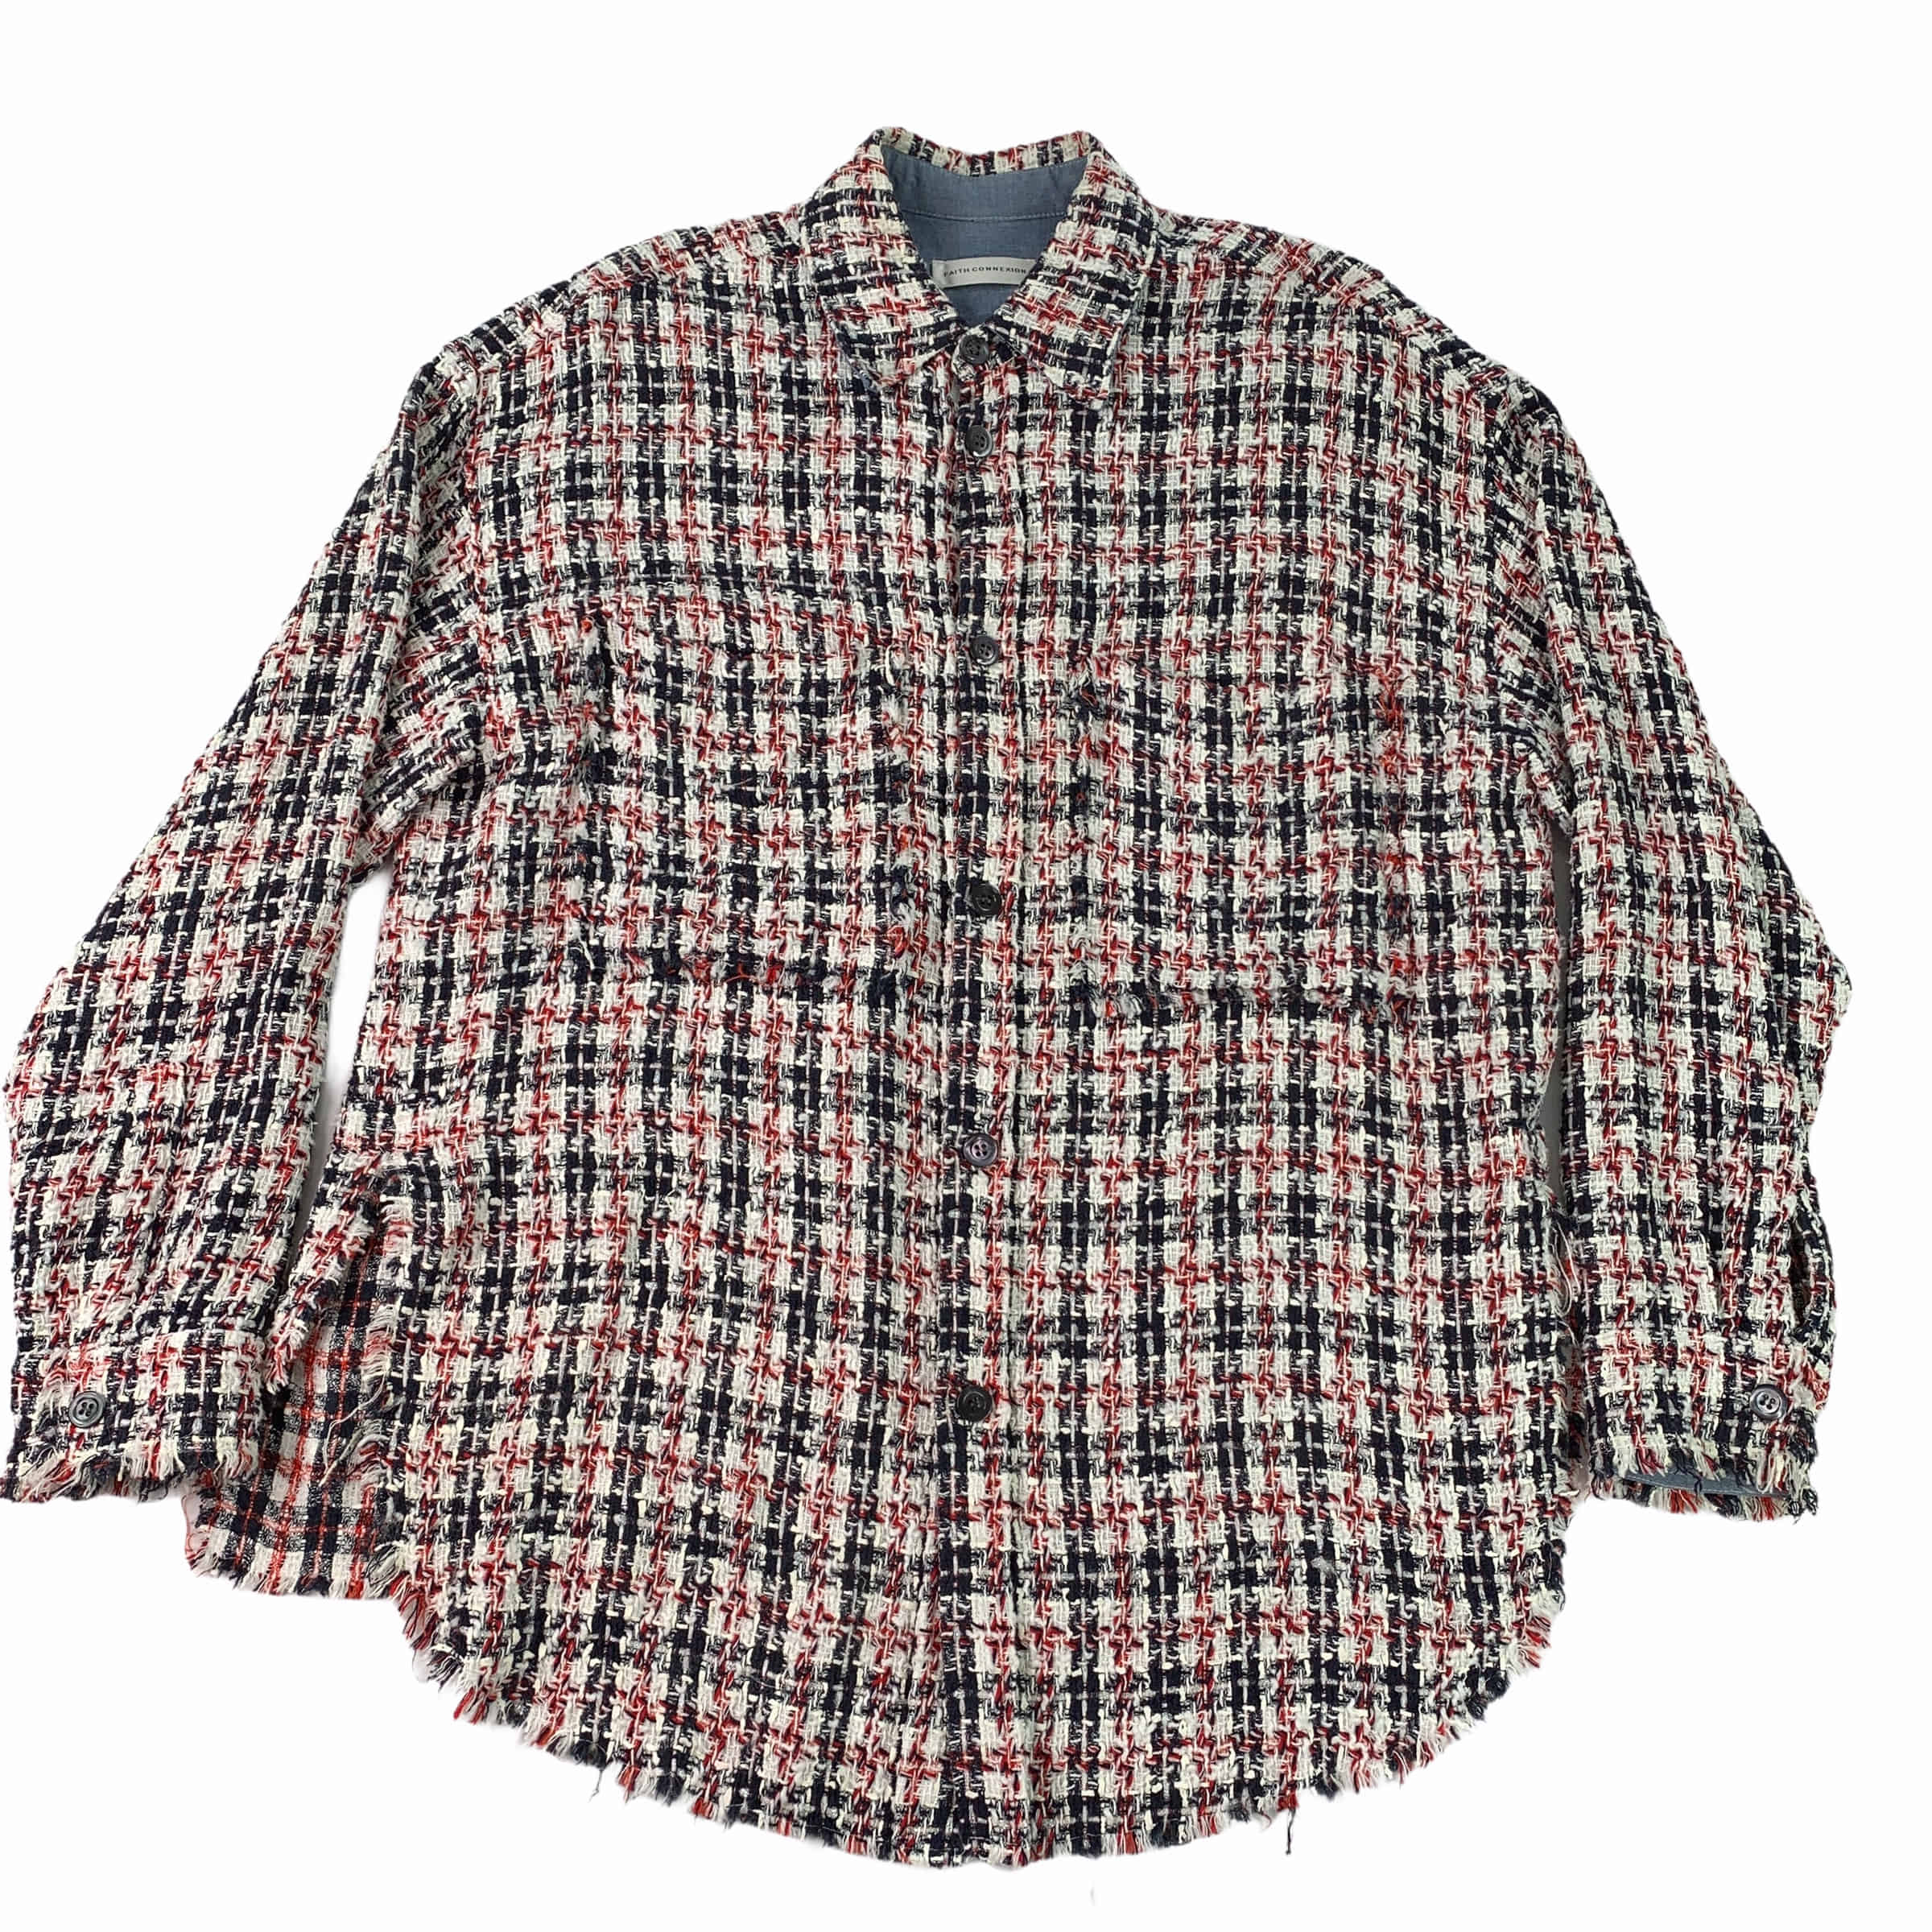 [Faithconnexion] Overfit tweed shirt -  Size M